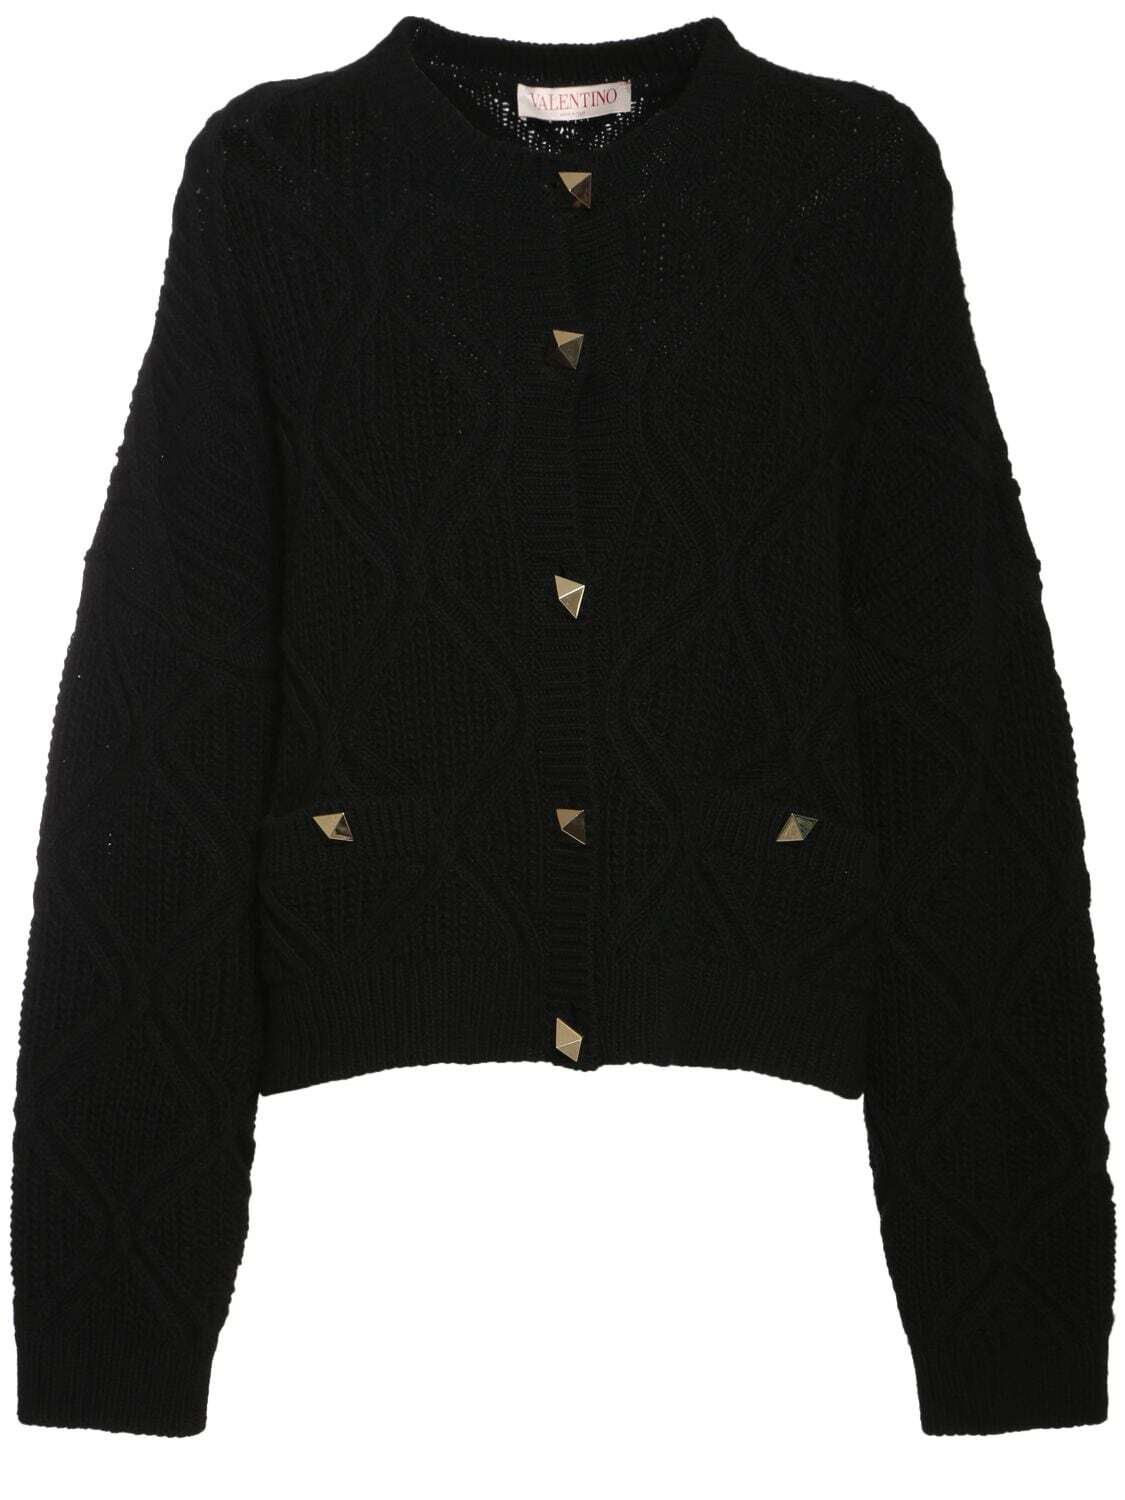 VALENTINO Geometric Cashmere & Wool Knit Cardigan in black